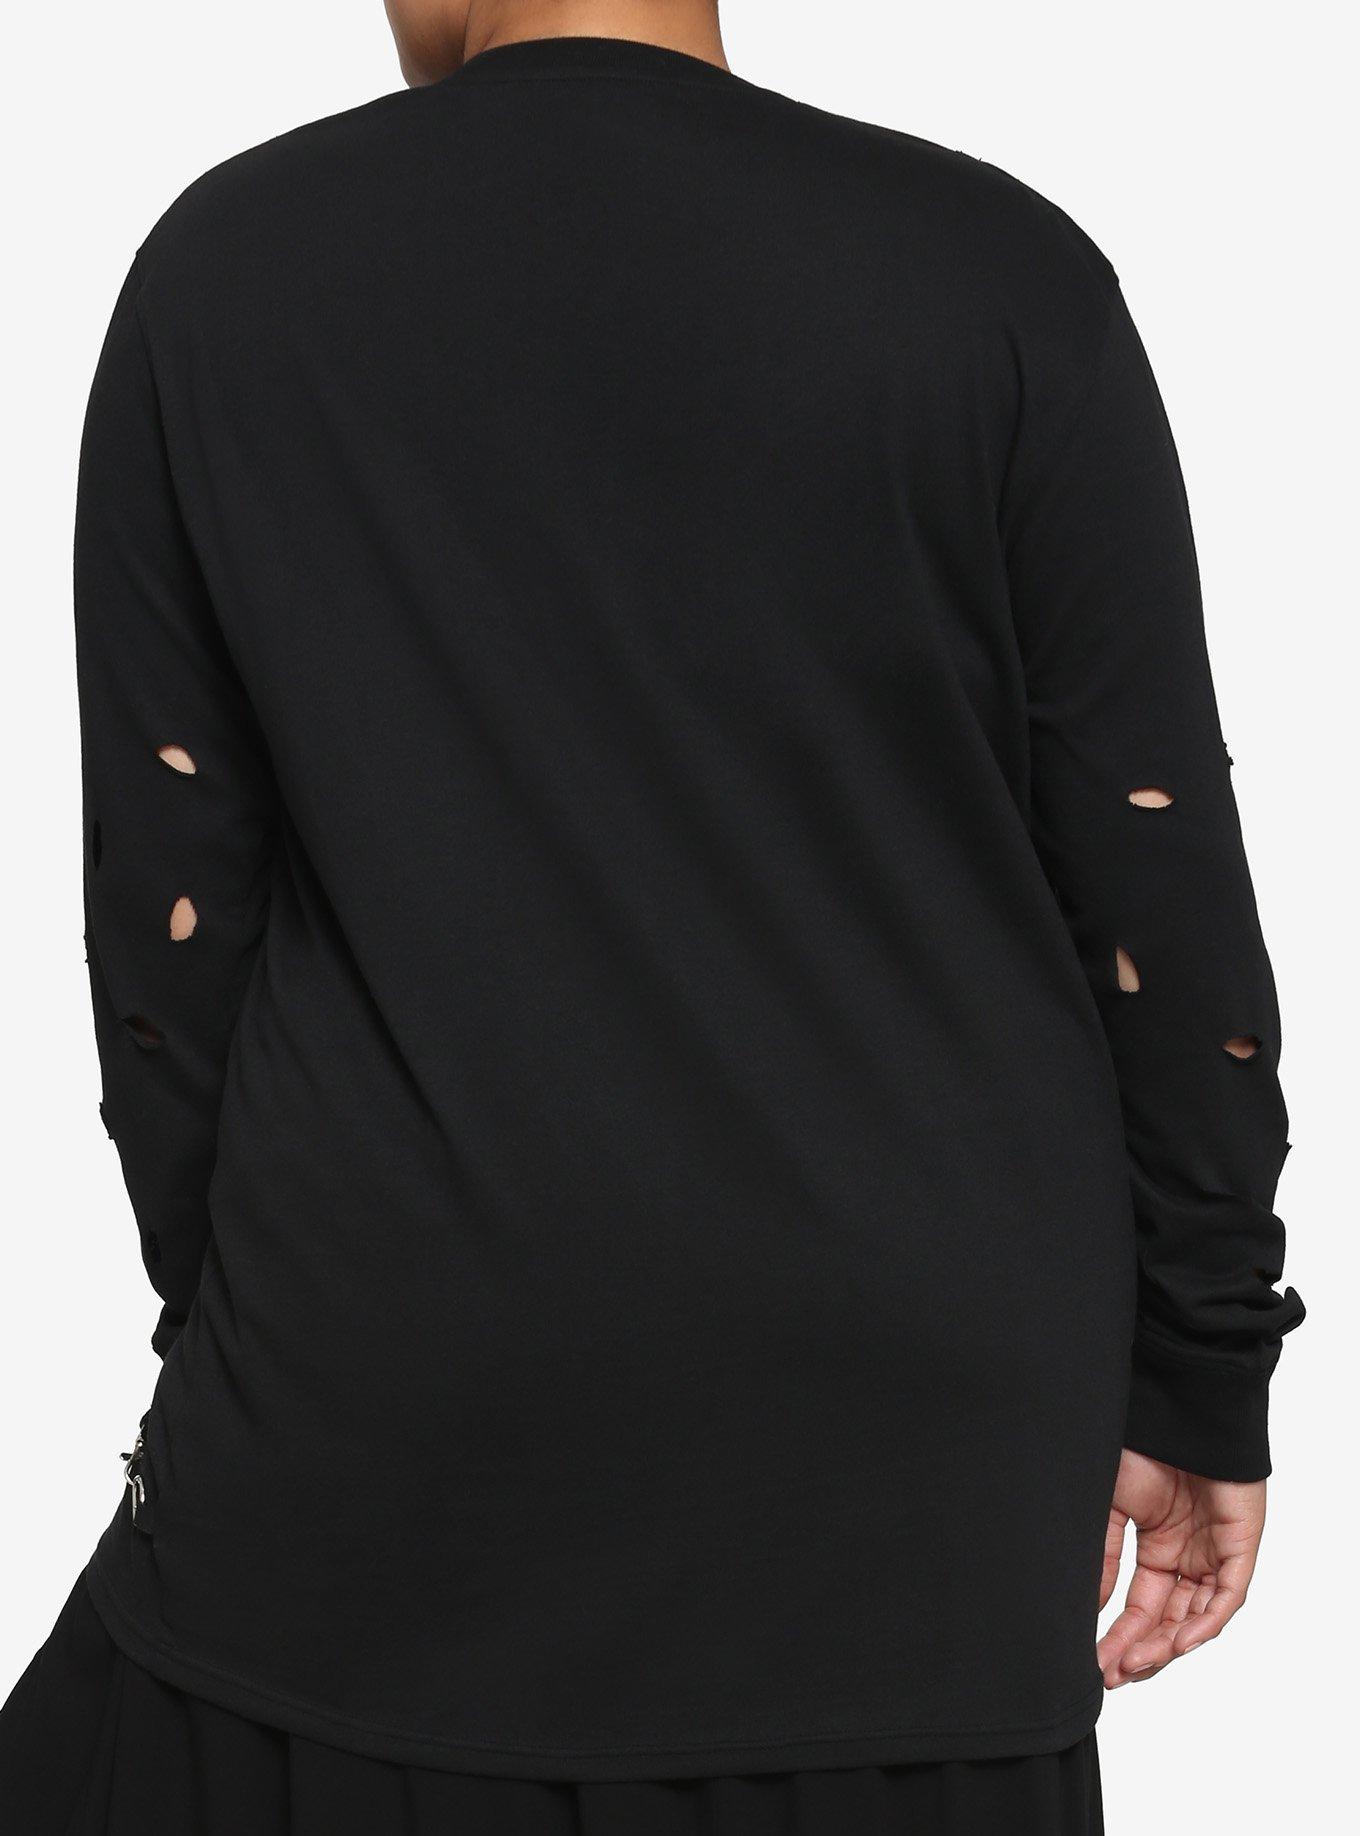 Black Distressed Front Suspender Oversized Girls Long-Sleeve T-Shirt Plus Size, BLACK, alternate